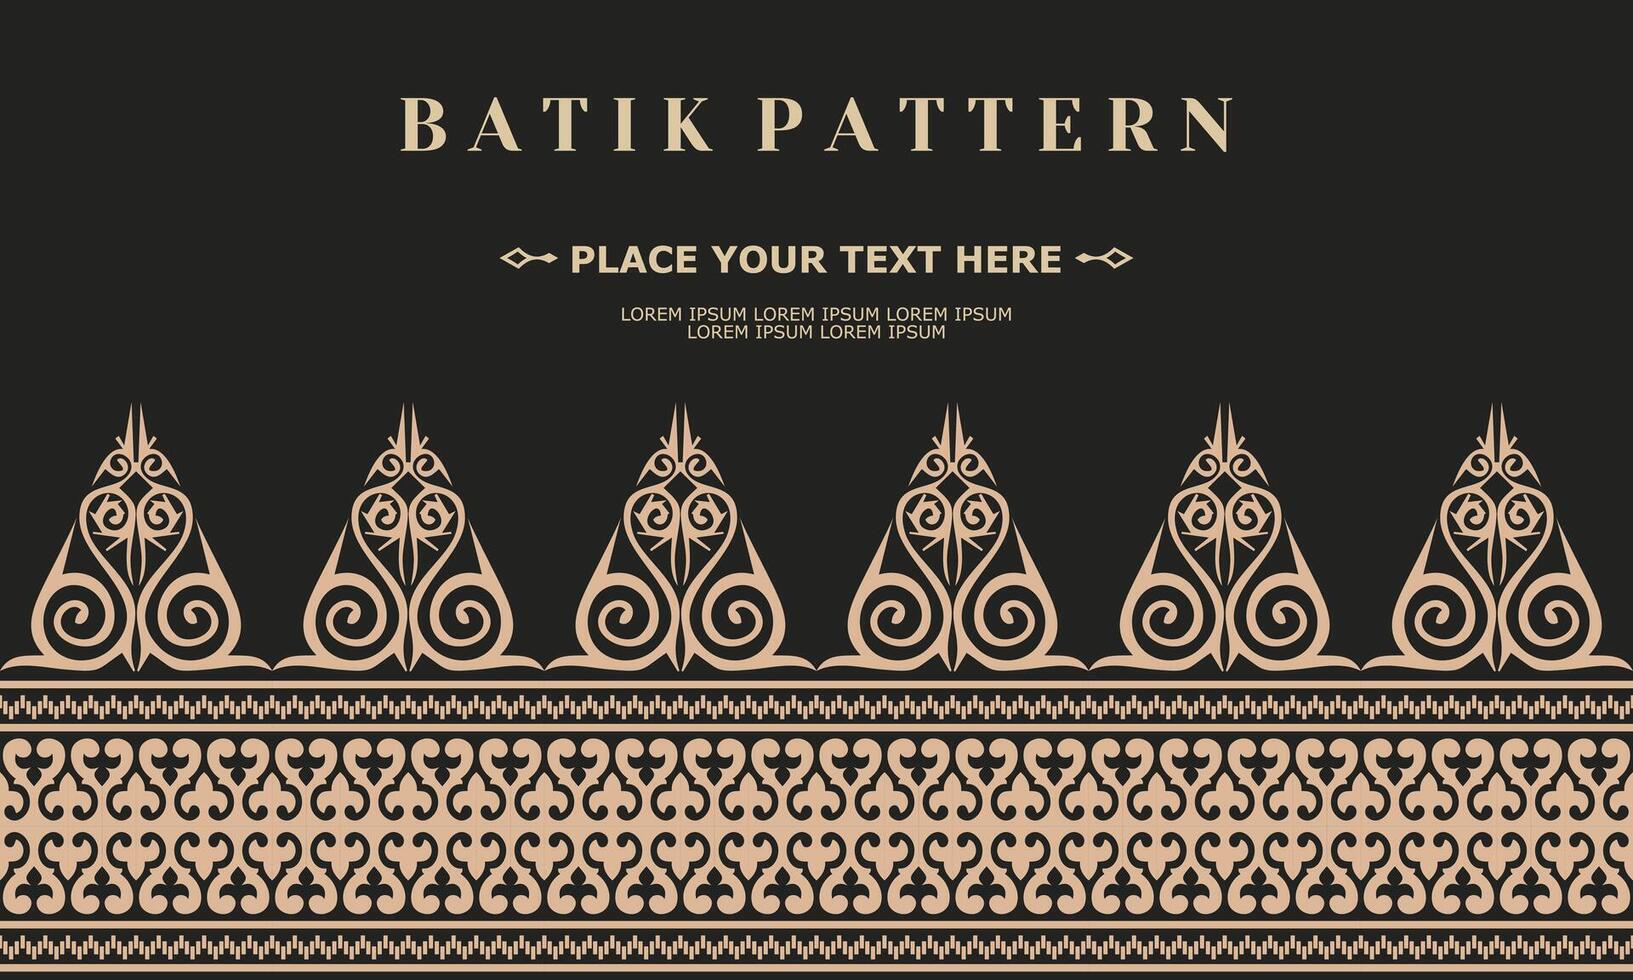 Ornament Vektor Muster traditionell Design Batik Muster